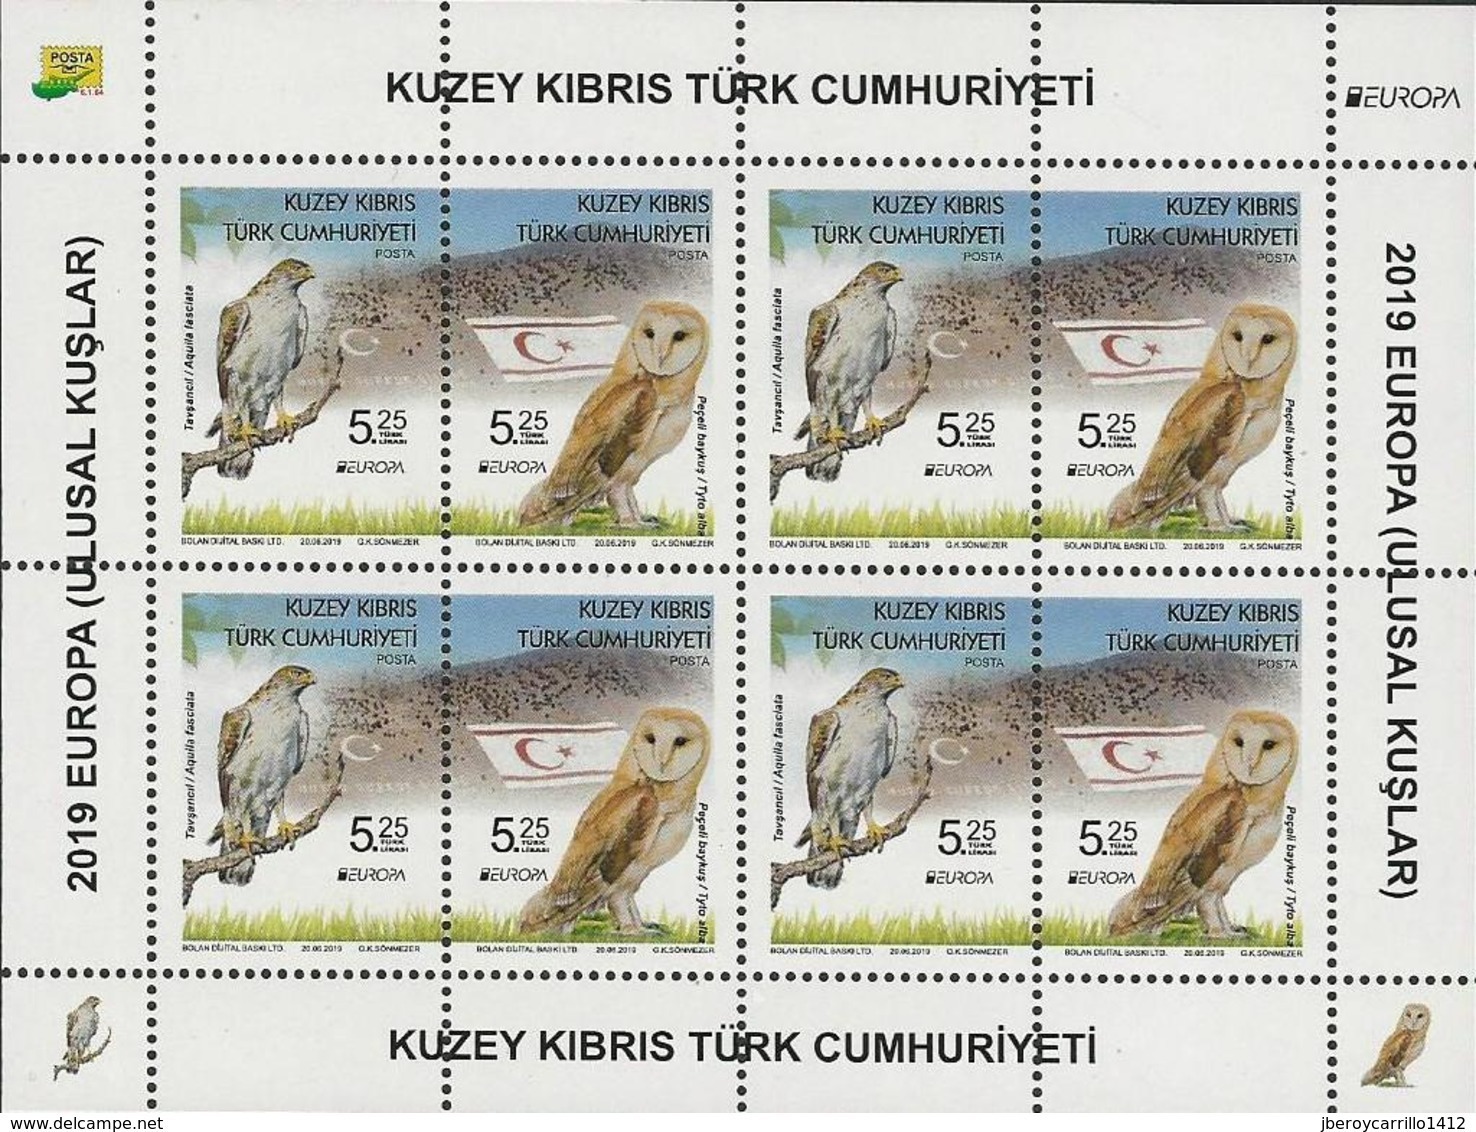 CHIPRE TURCO /TURKISH CYPRUS /TÜRKISCH ZYPERN  -EUROPA 2019 -NATIONAL BIRDS.-"AVES-BIRDS-VÖGEL-OISEAUX"-SHEET 4 STAMPS - 2019